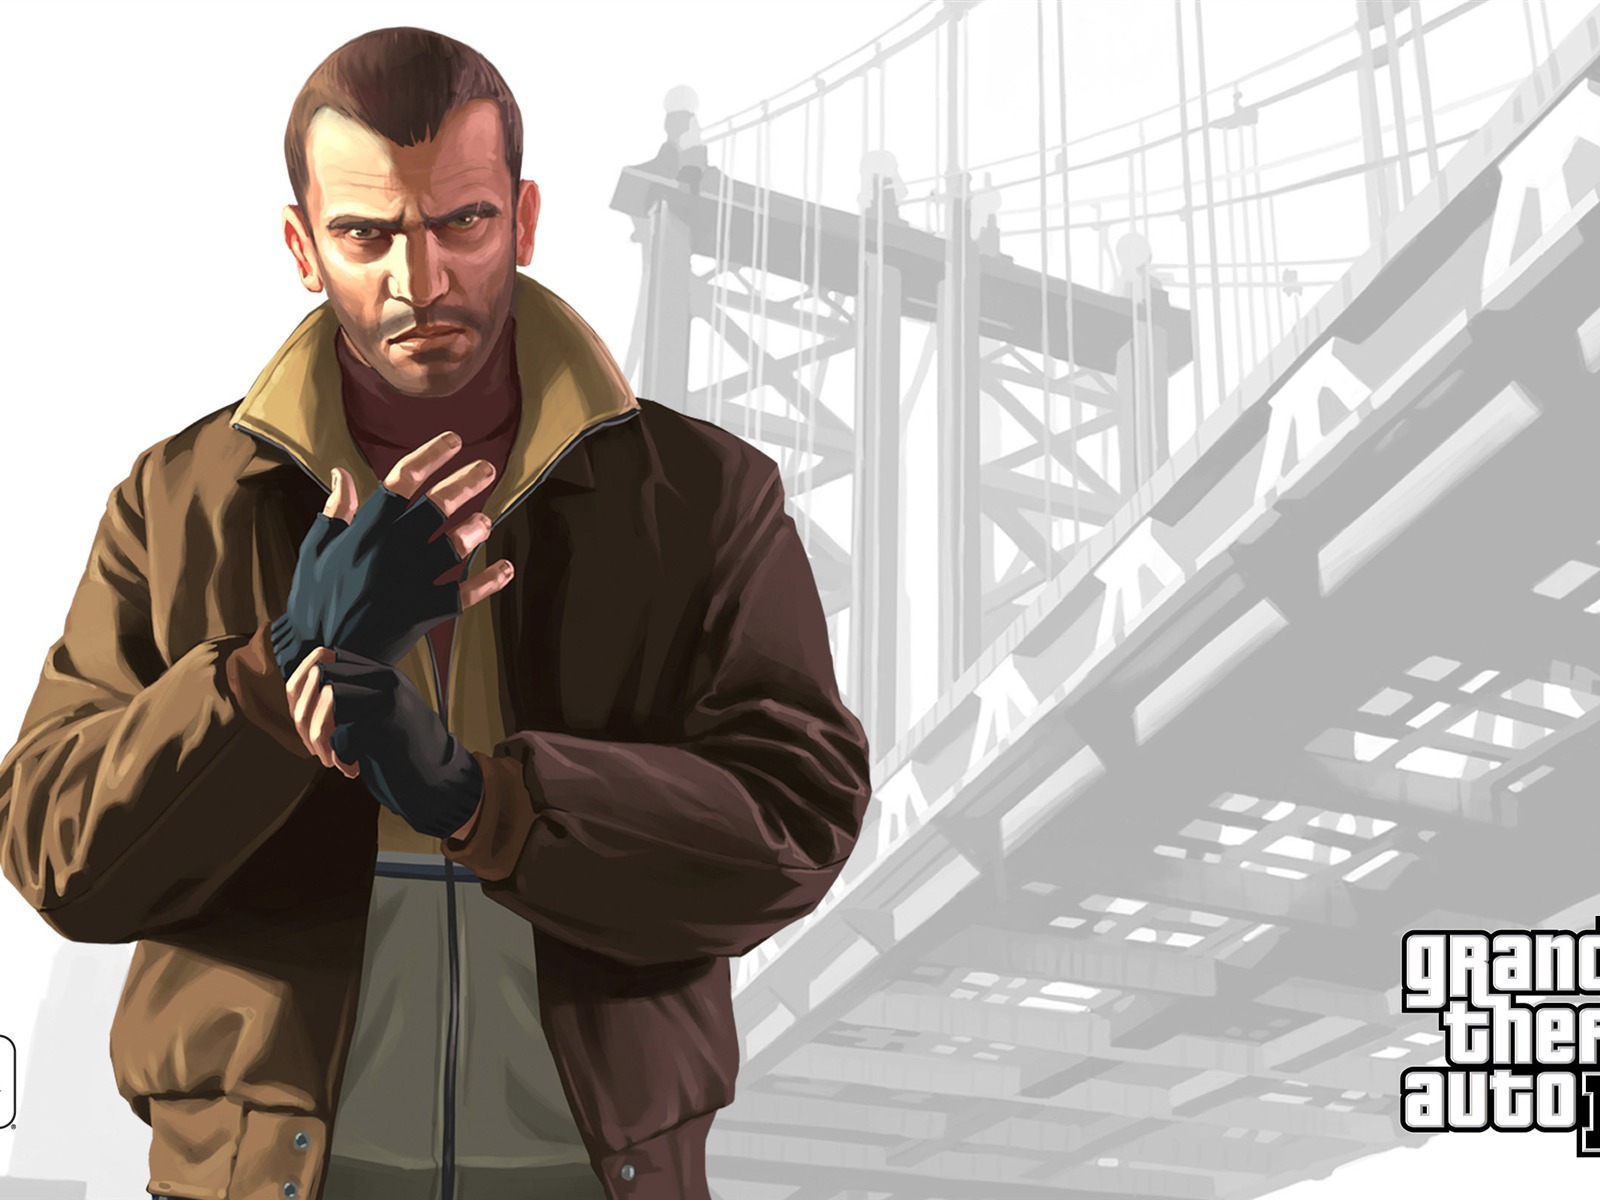 Grand Theft Auto: Vice City 侠盗猎车手: 罪恶都市10 - 1600x1200